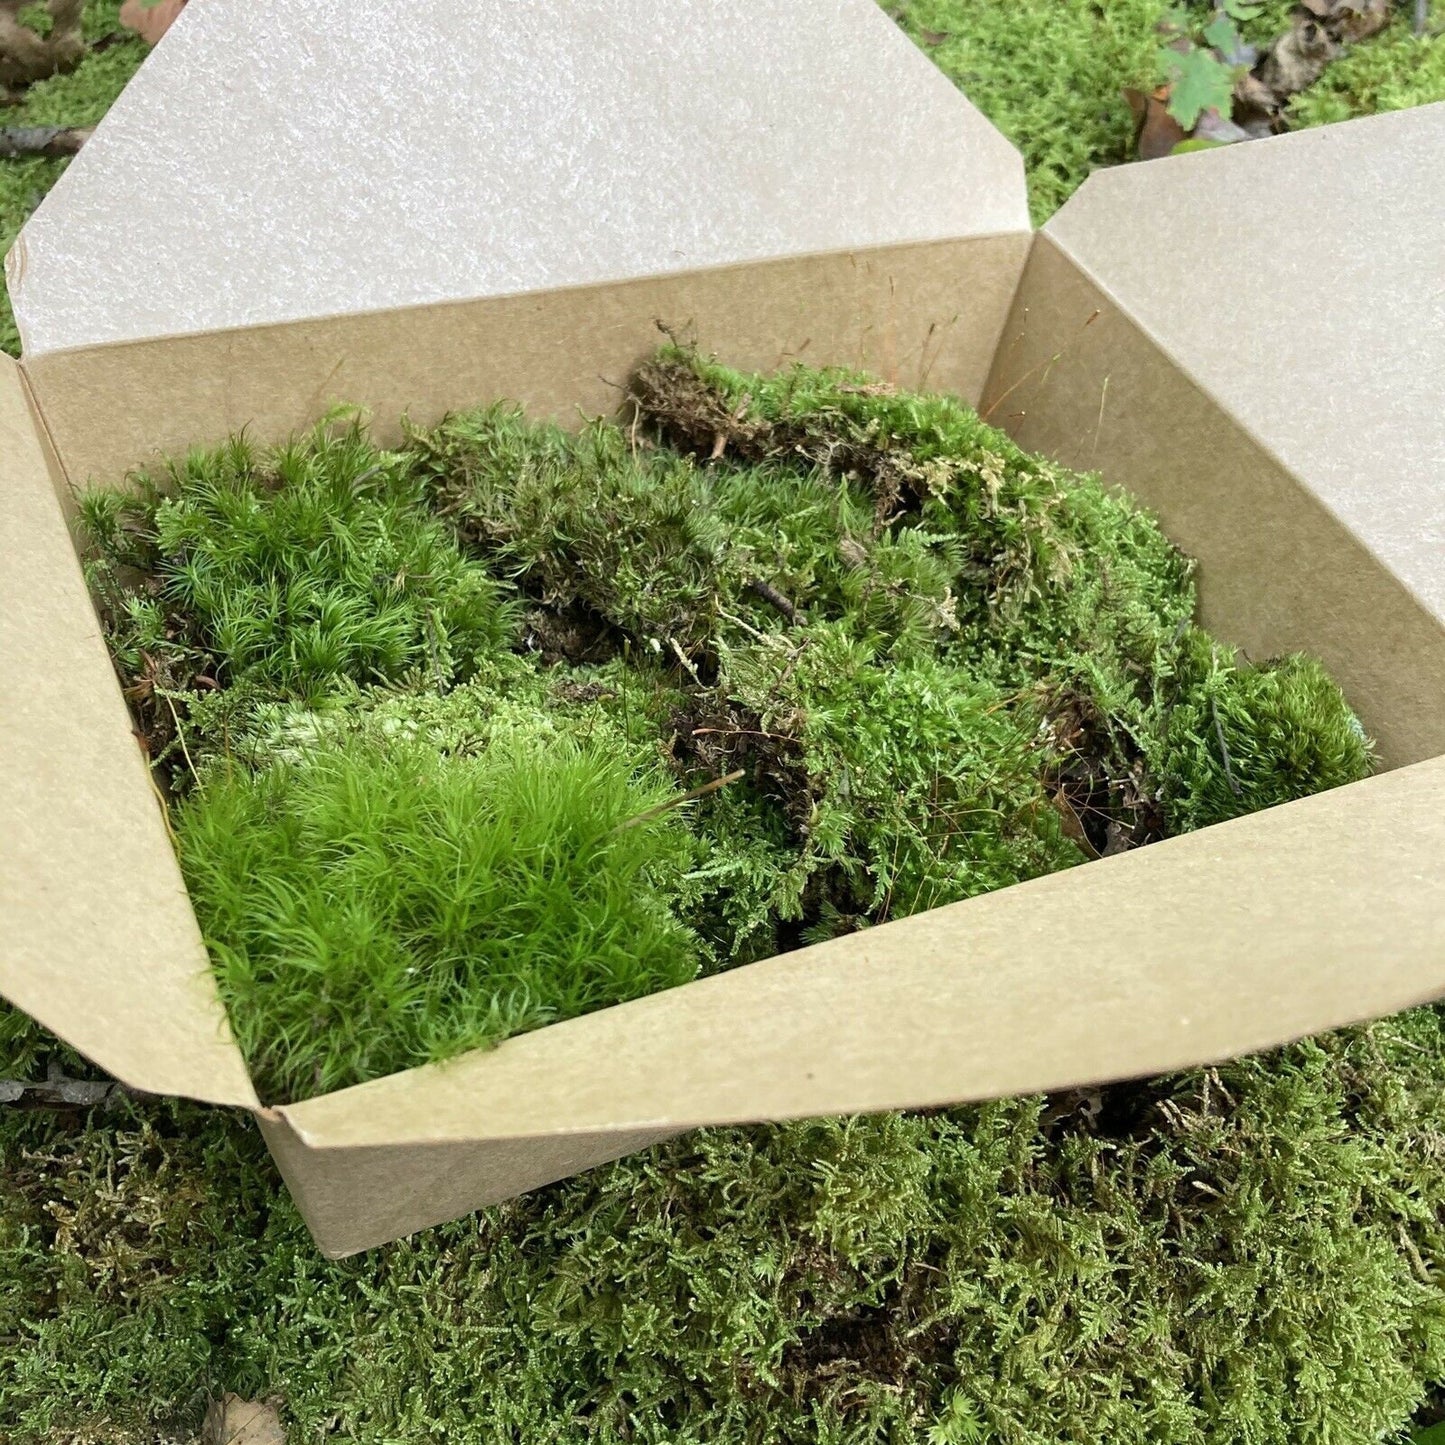 Teddy-bear Moss (Rhytidiadelphus Triquetrus) Live Moss for Terrarium  building projects DIY Rare Moss (5 Plants)